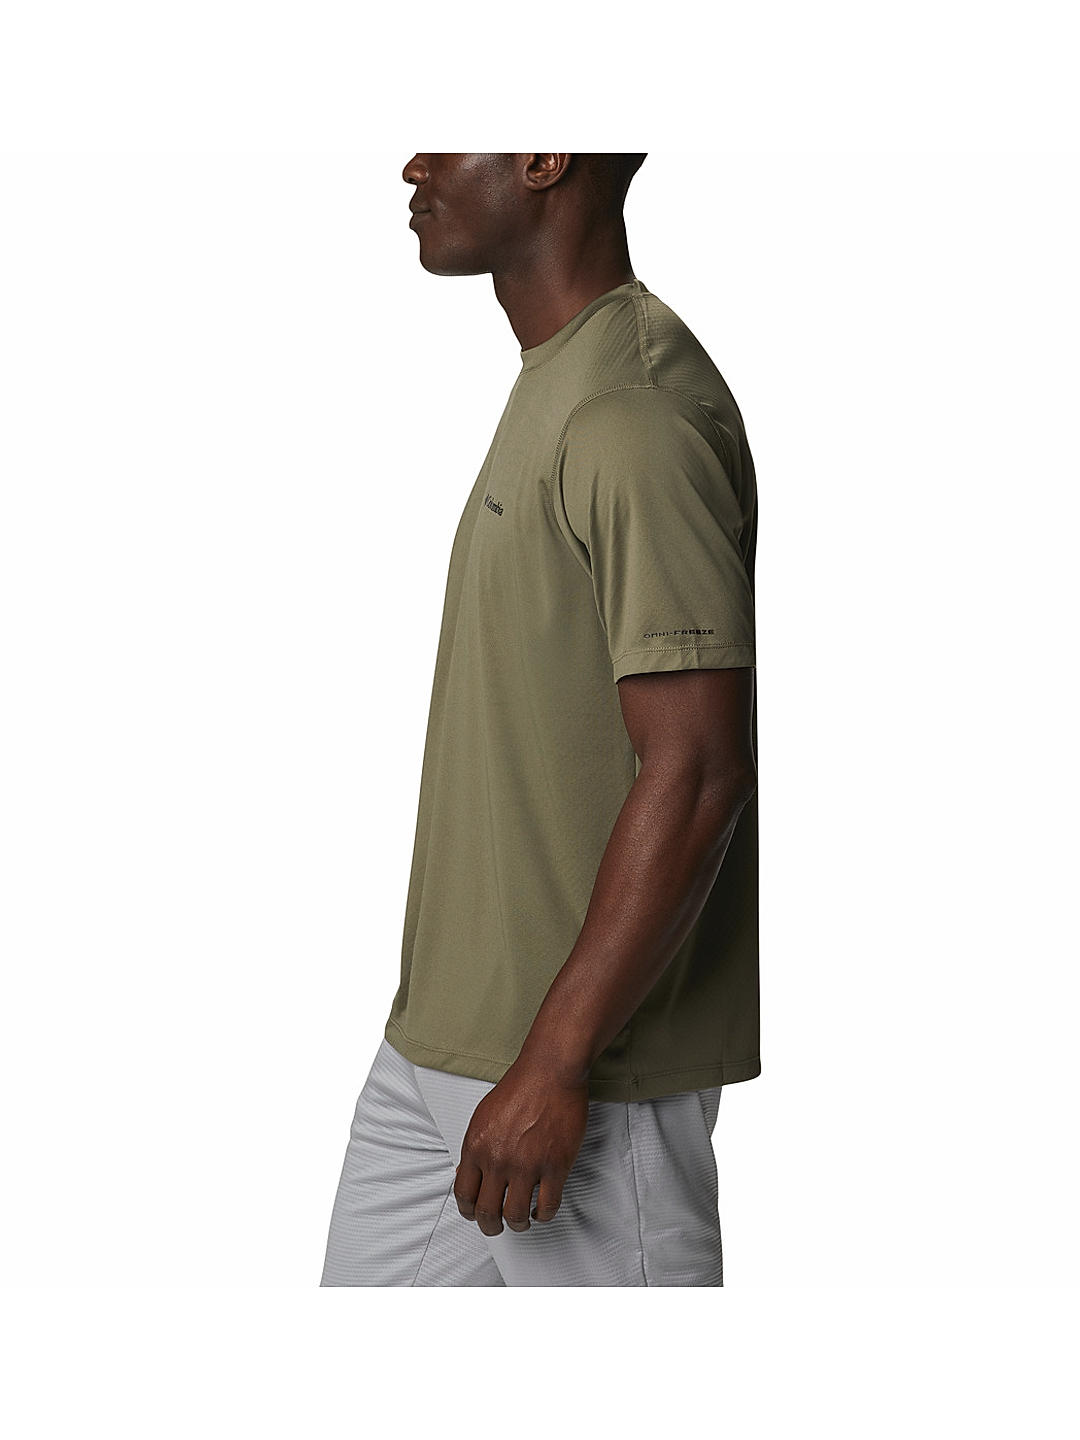 Buy Green Zero Rules Short Sleeve Shirt for Men Online at Columbia Spo